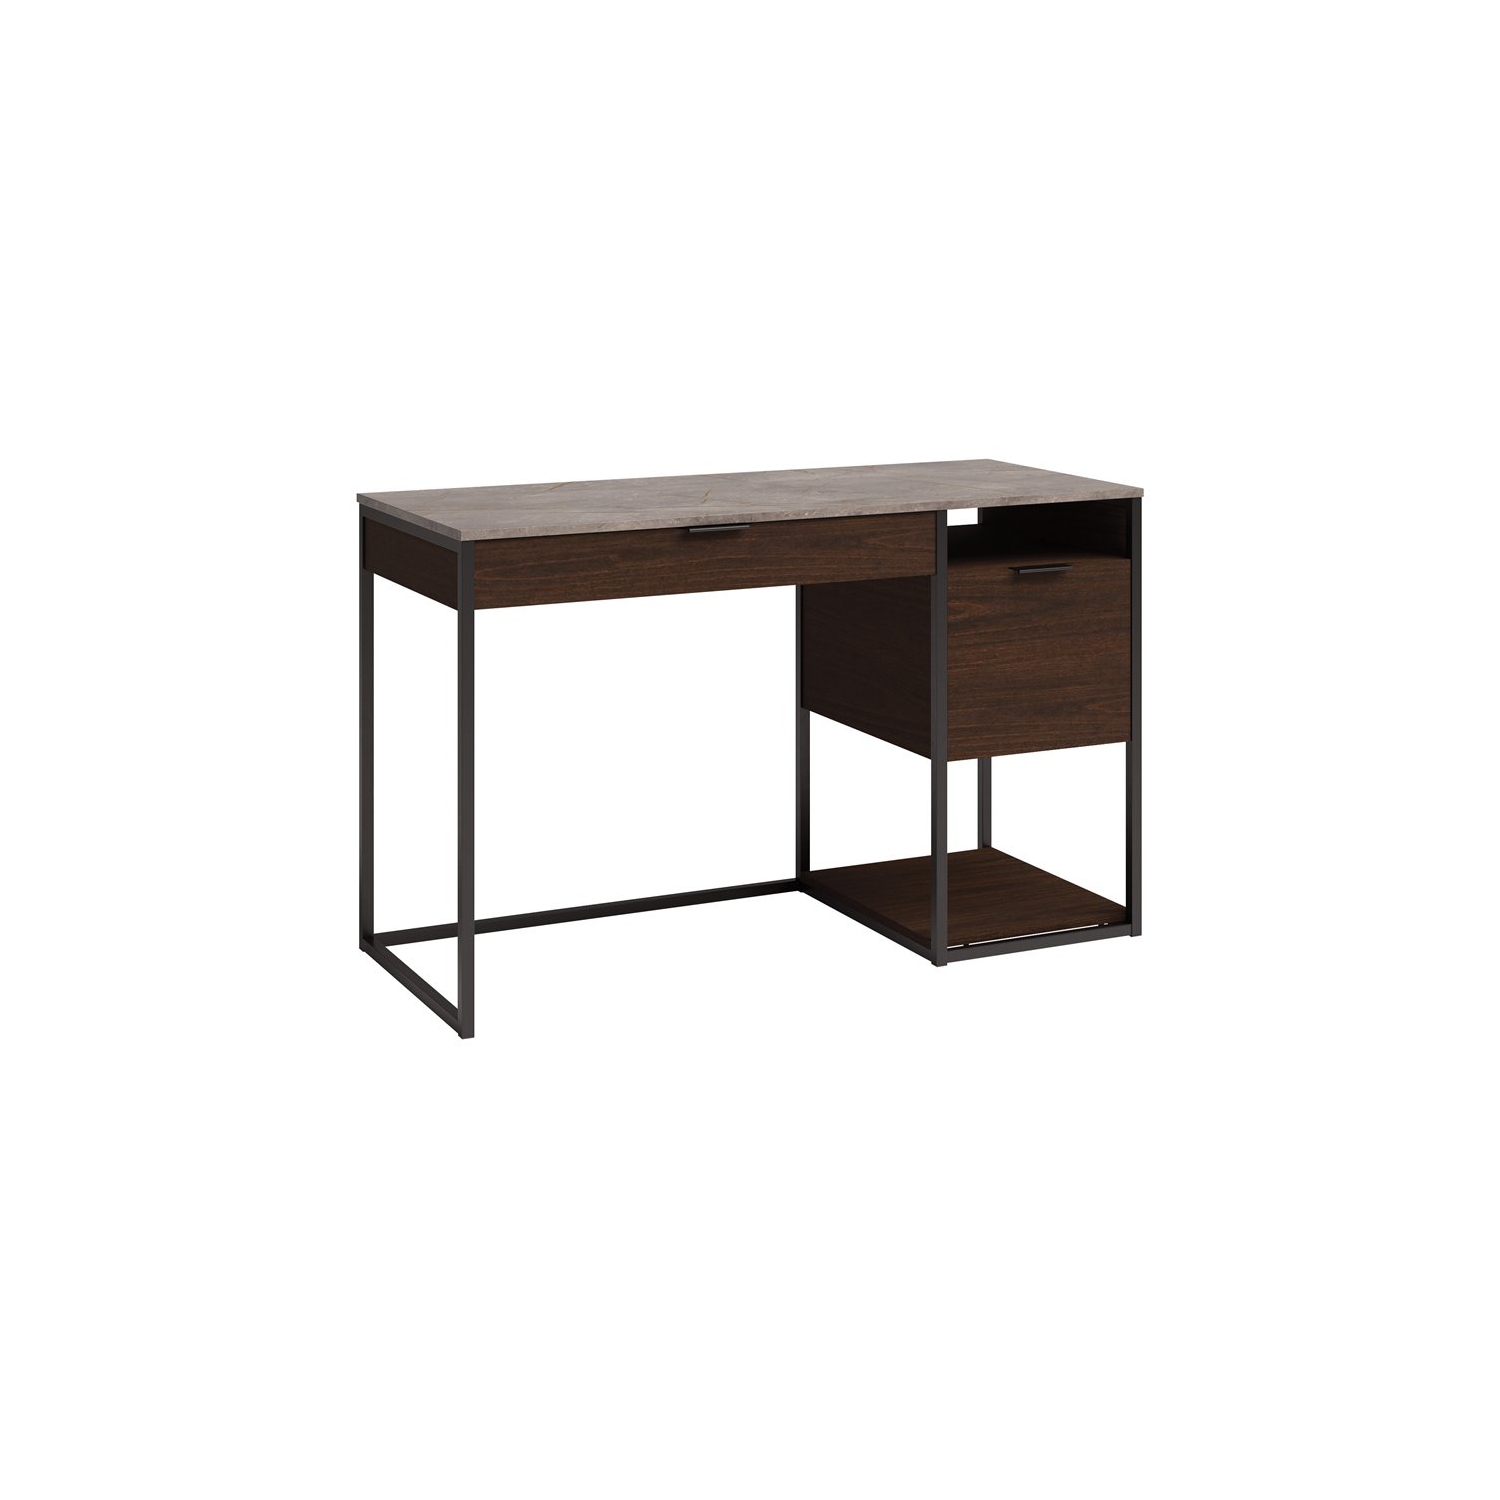 Sauder International Lux Single Pedestal Desk in Umber Wood/Deco Stone accent